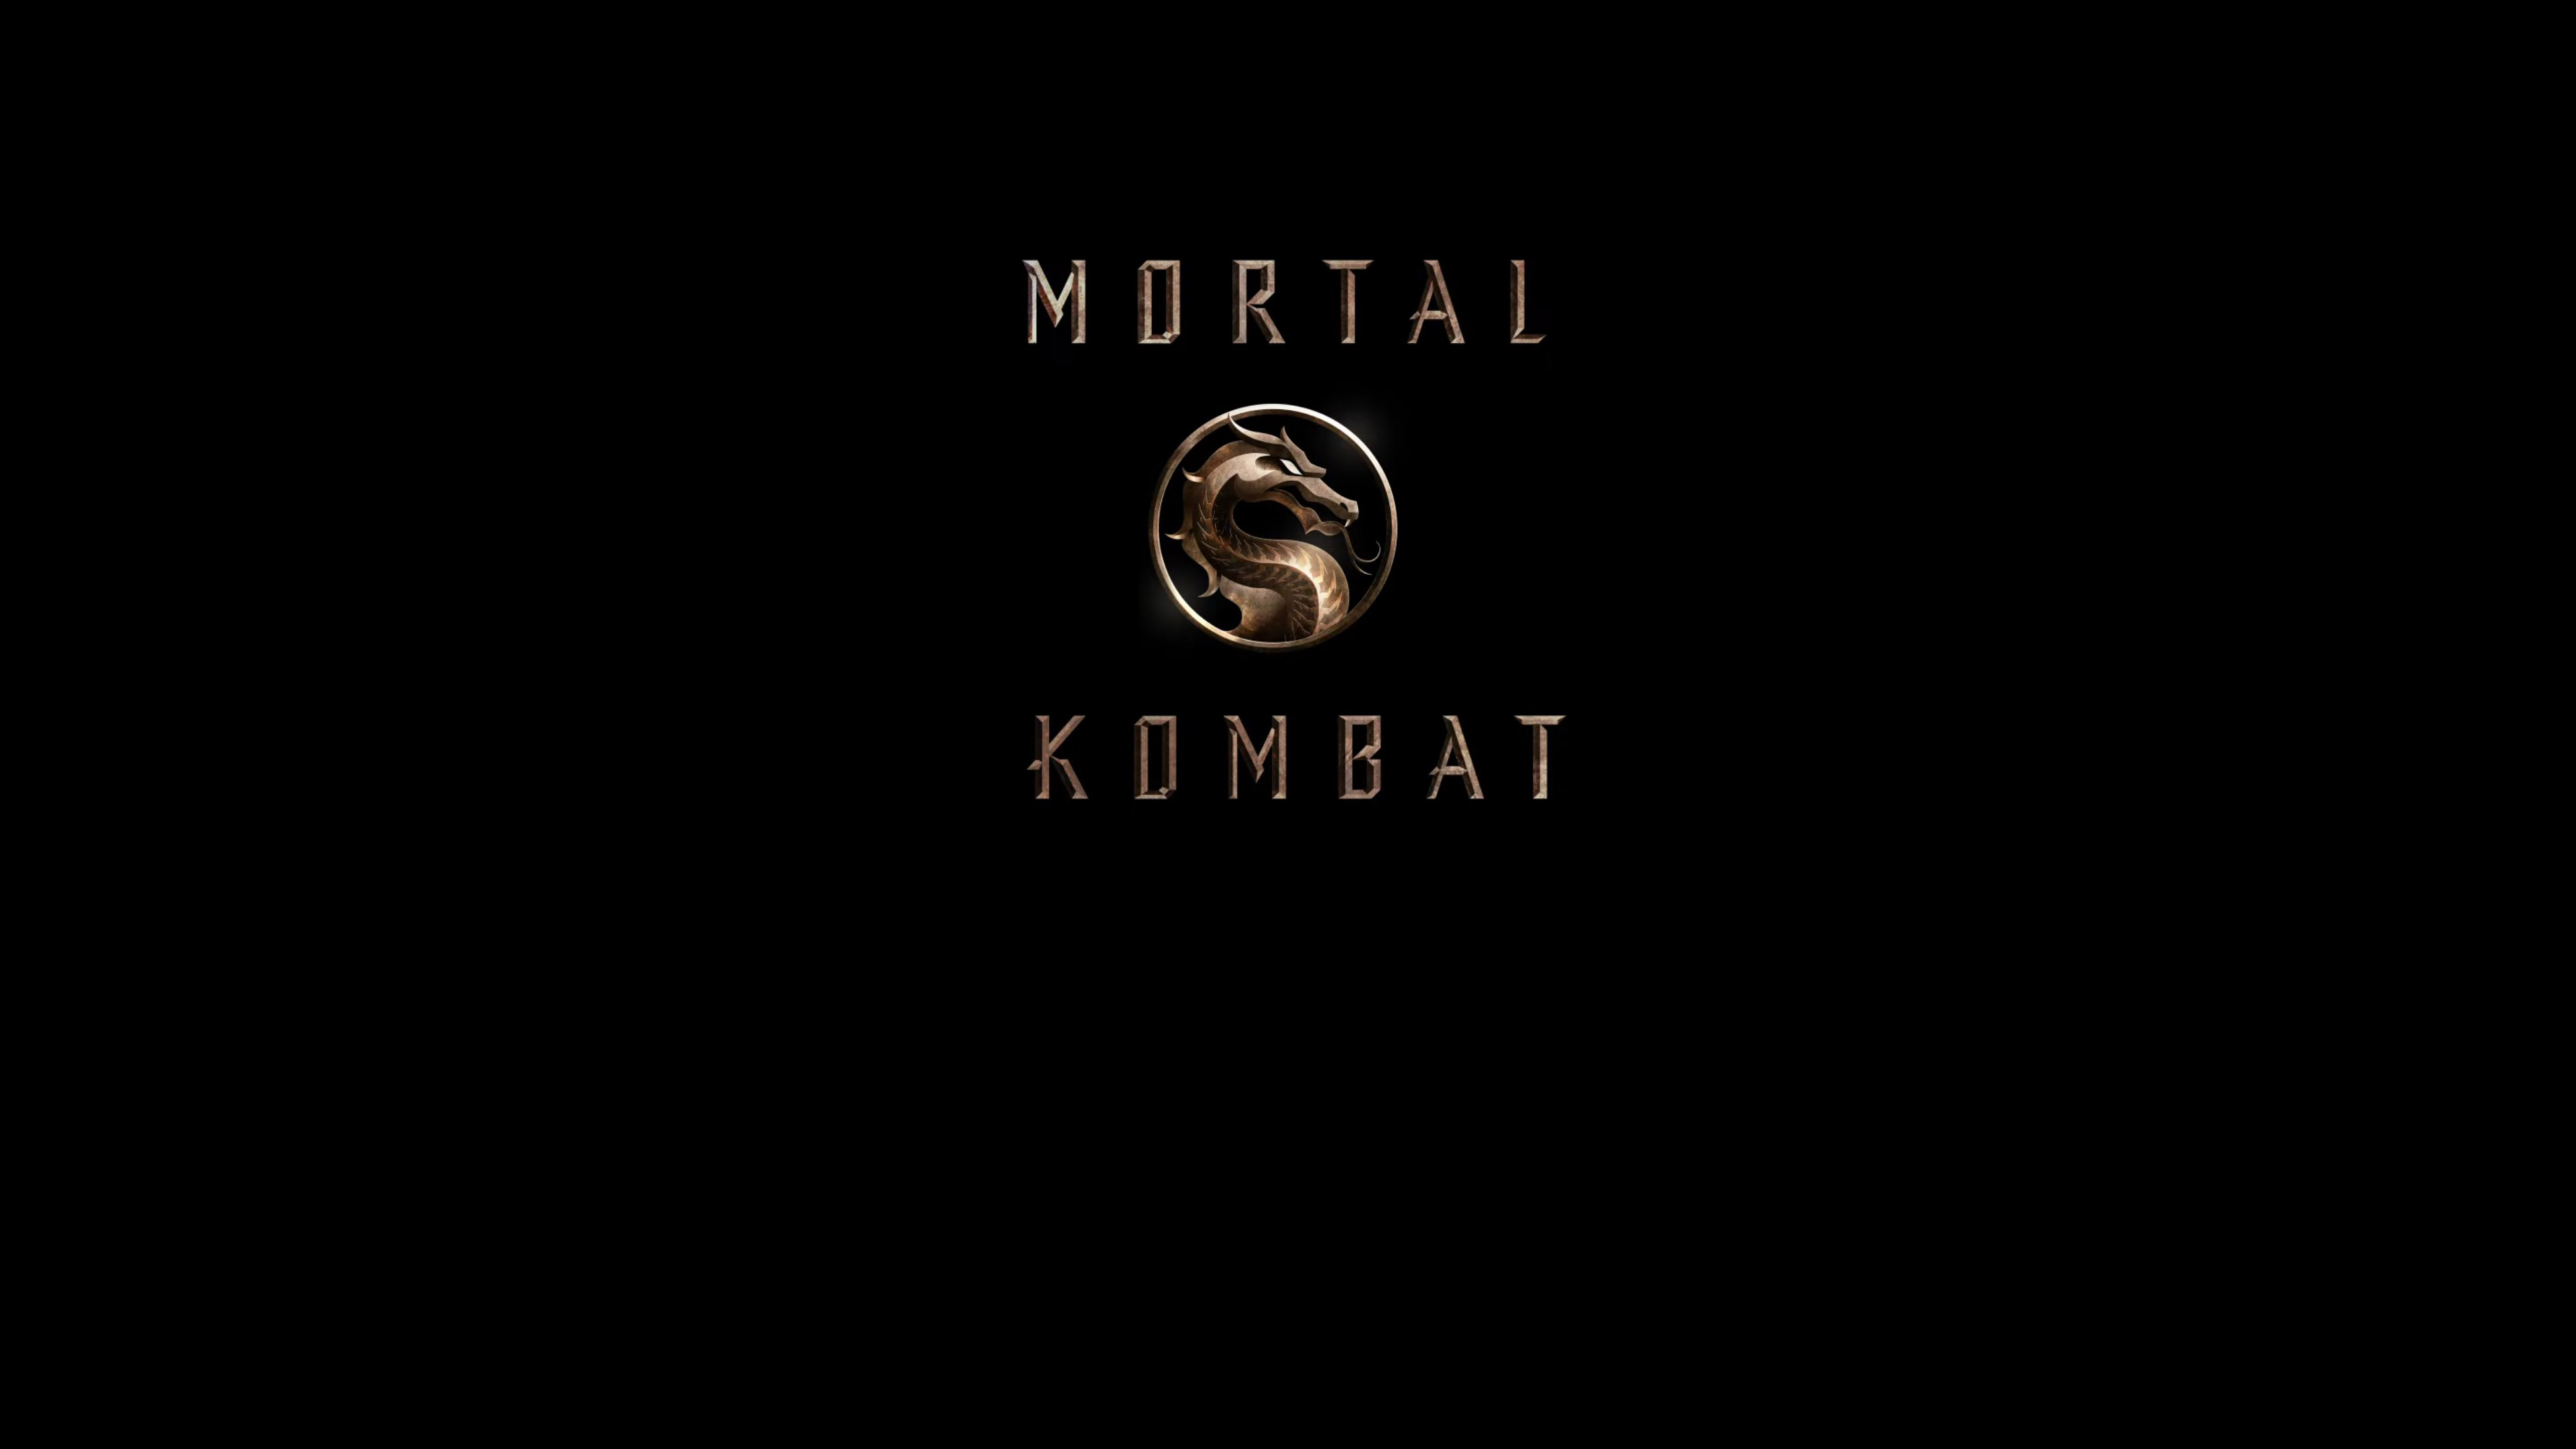 Wallpaper 4k Sub Zero And Scorpion Mortal Kombat 4k Wallpaper